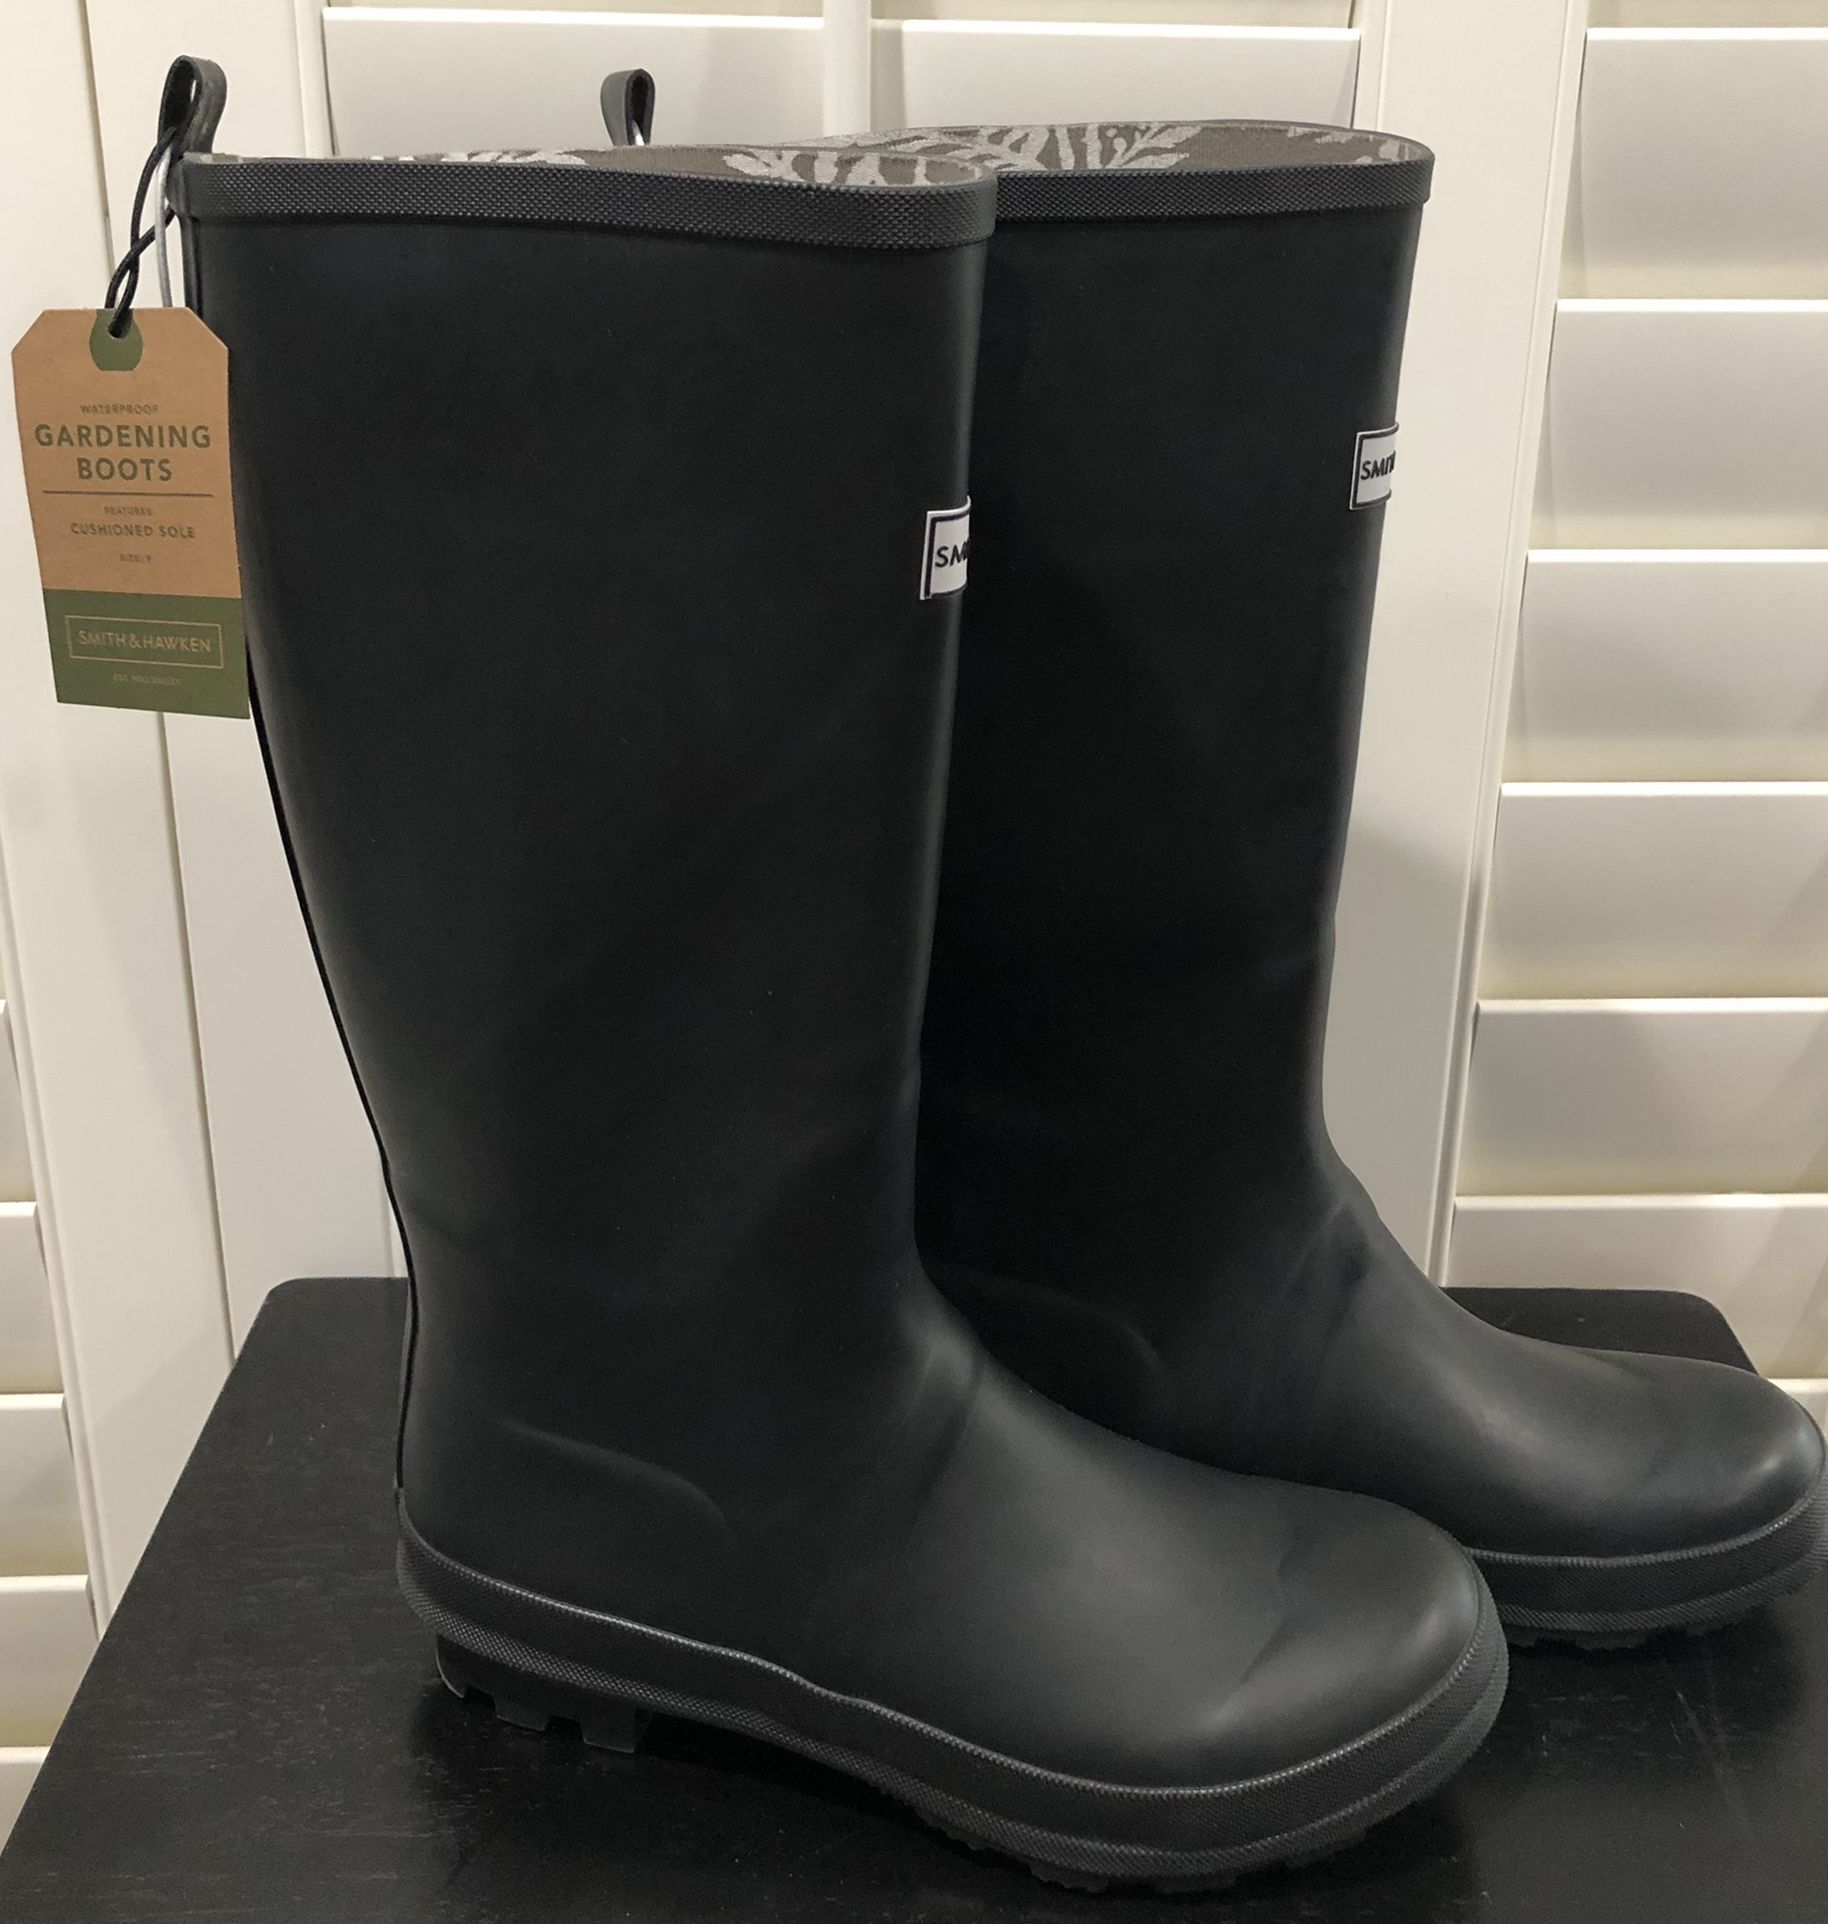 BRAND NEW Women's Smith & Hawken Tall Rain/Garden Boots (Women’s Size 8) - $25